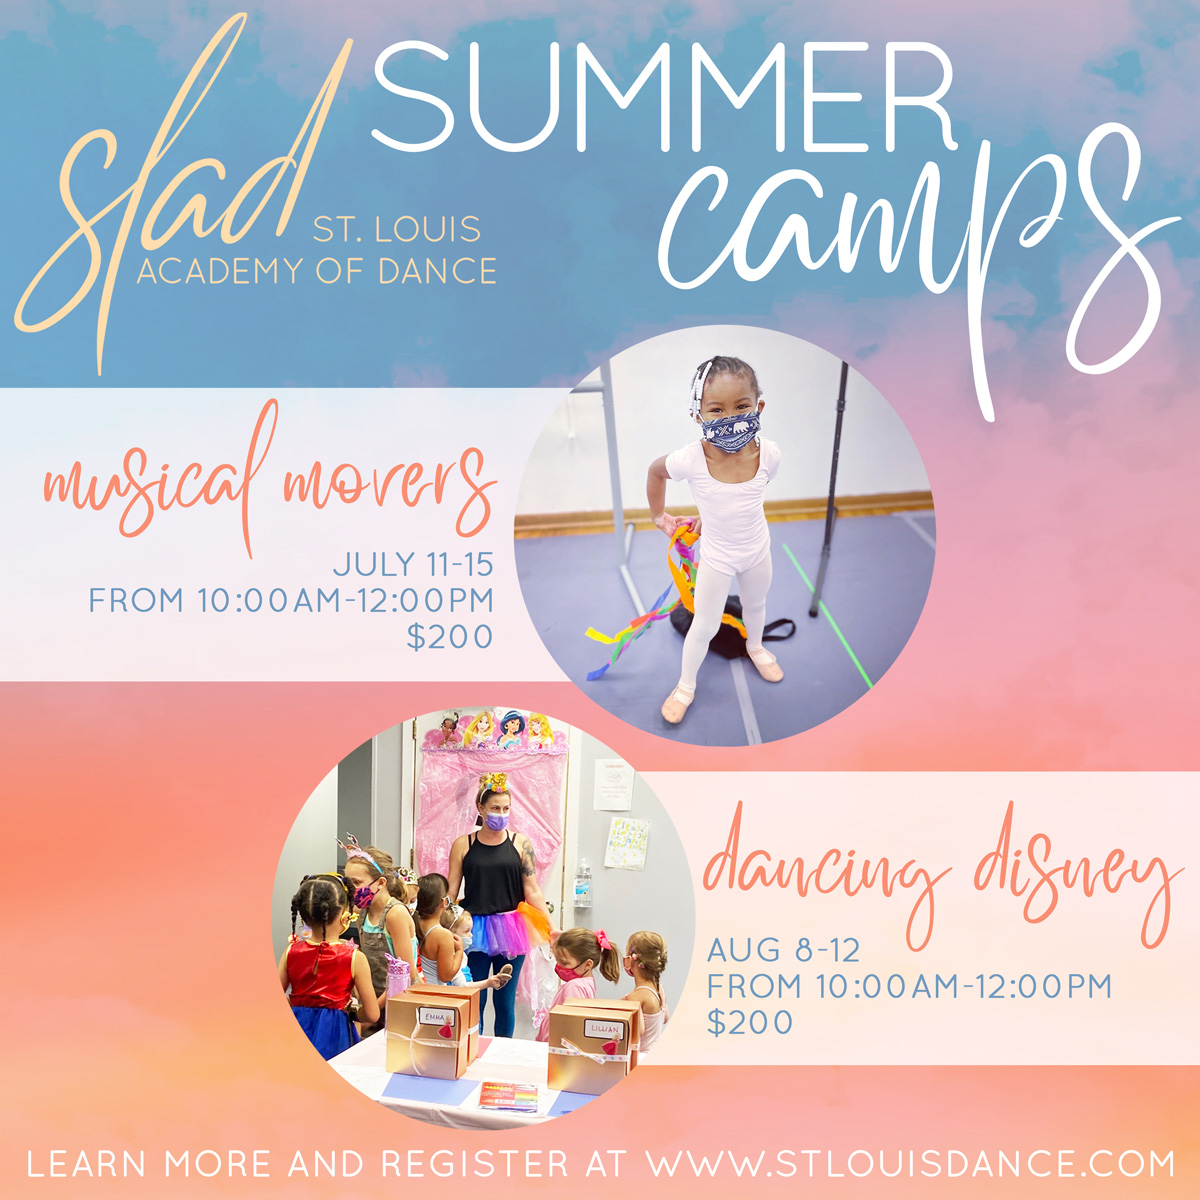 Summer Camps at SLAD